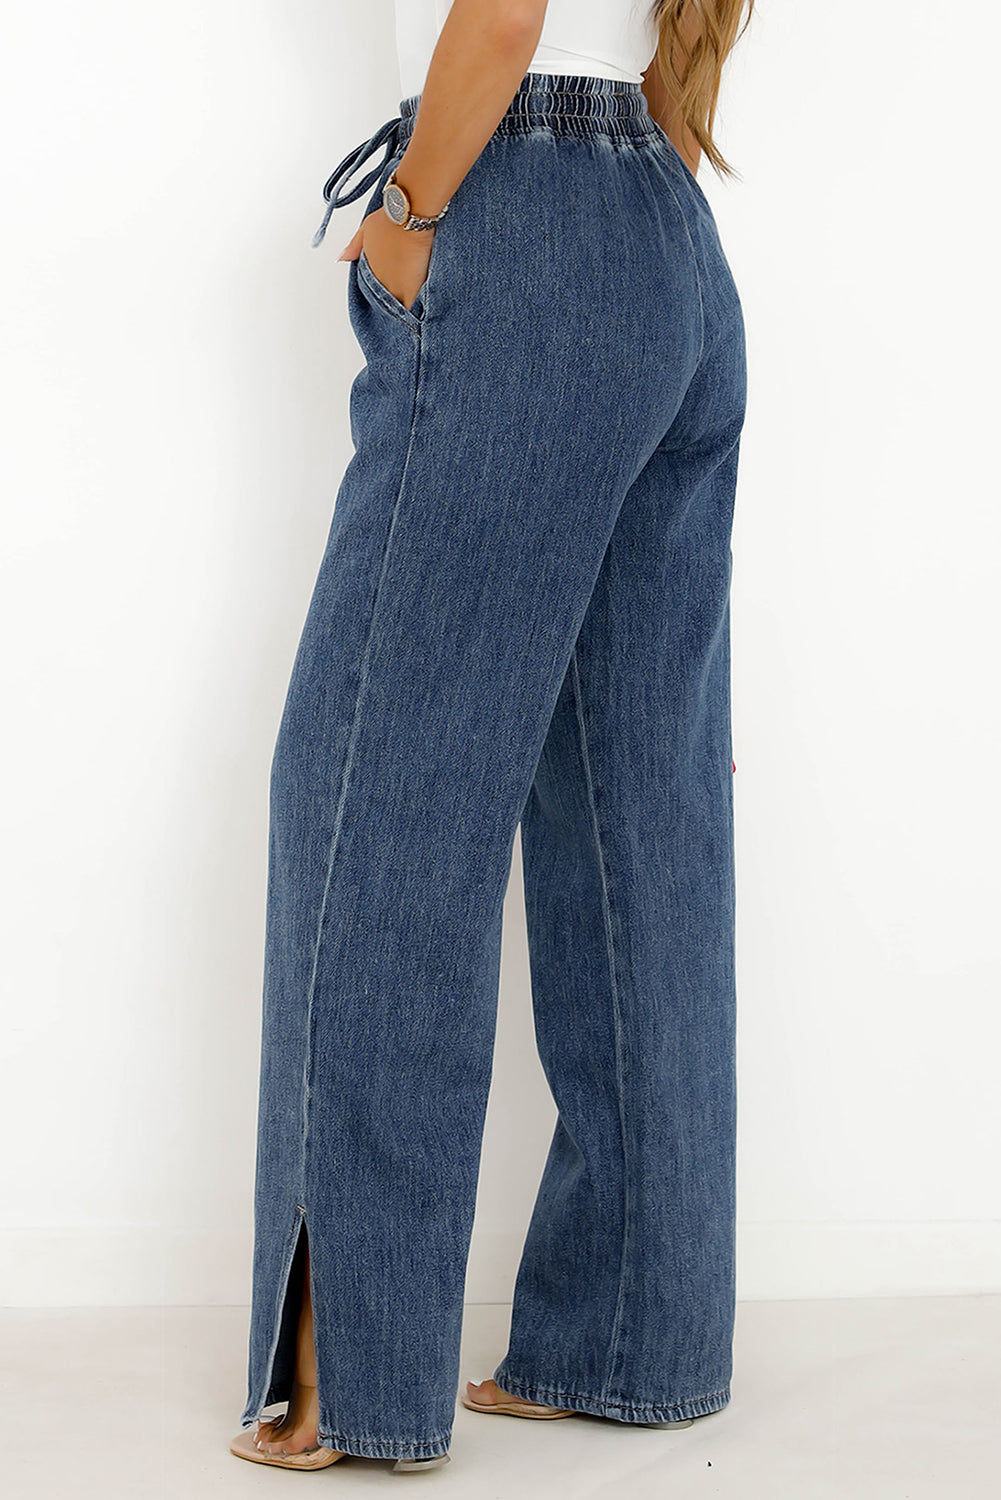 Jeans a gamba larga con coulisse in vita elastica blu scuro